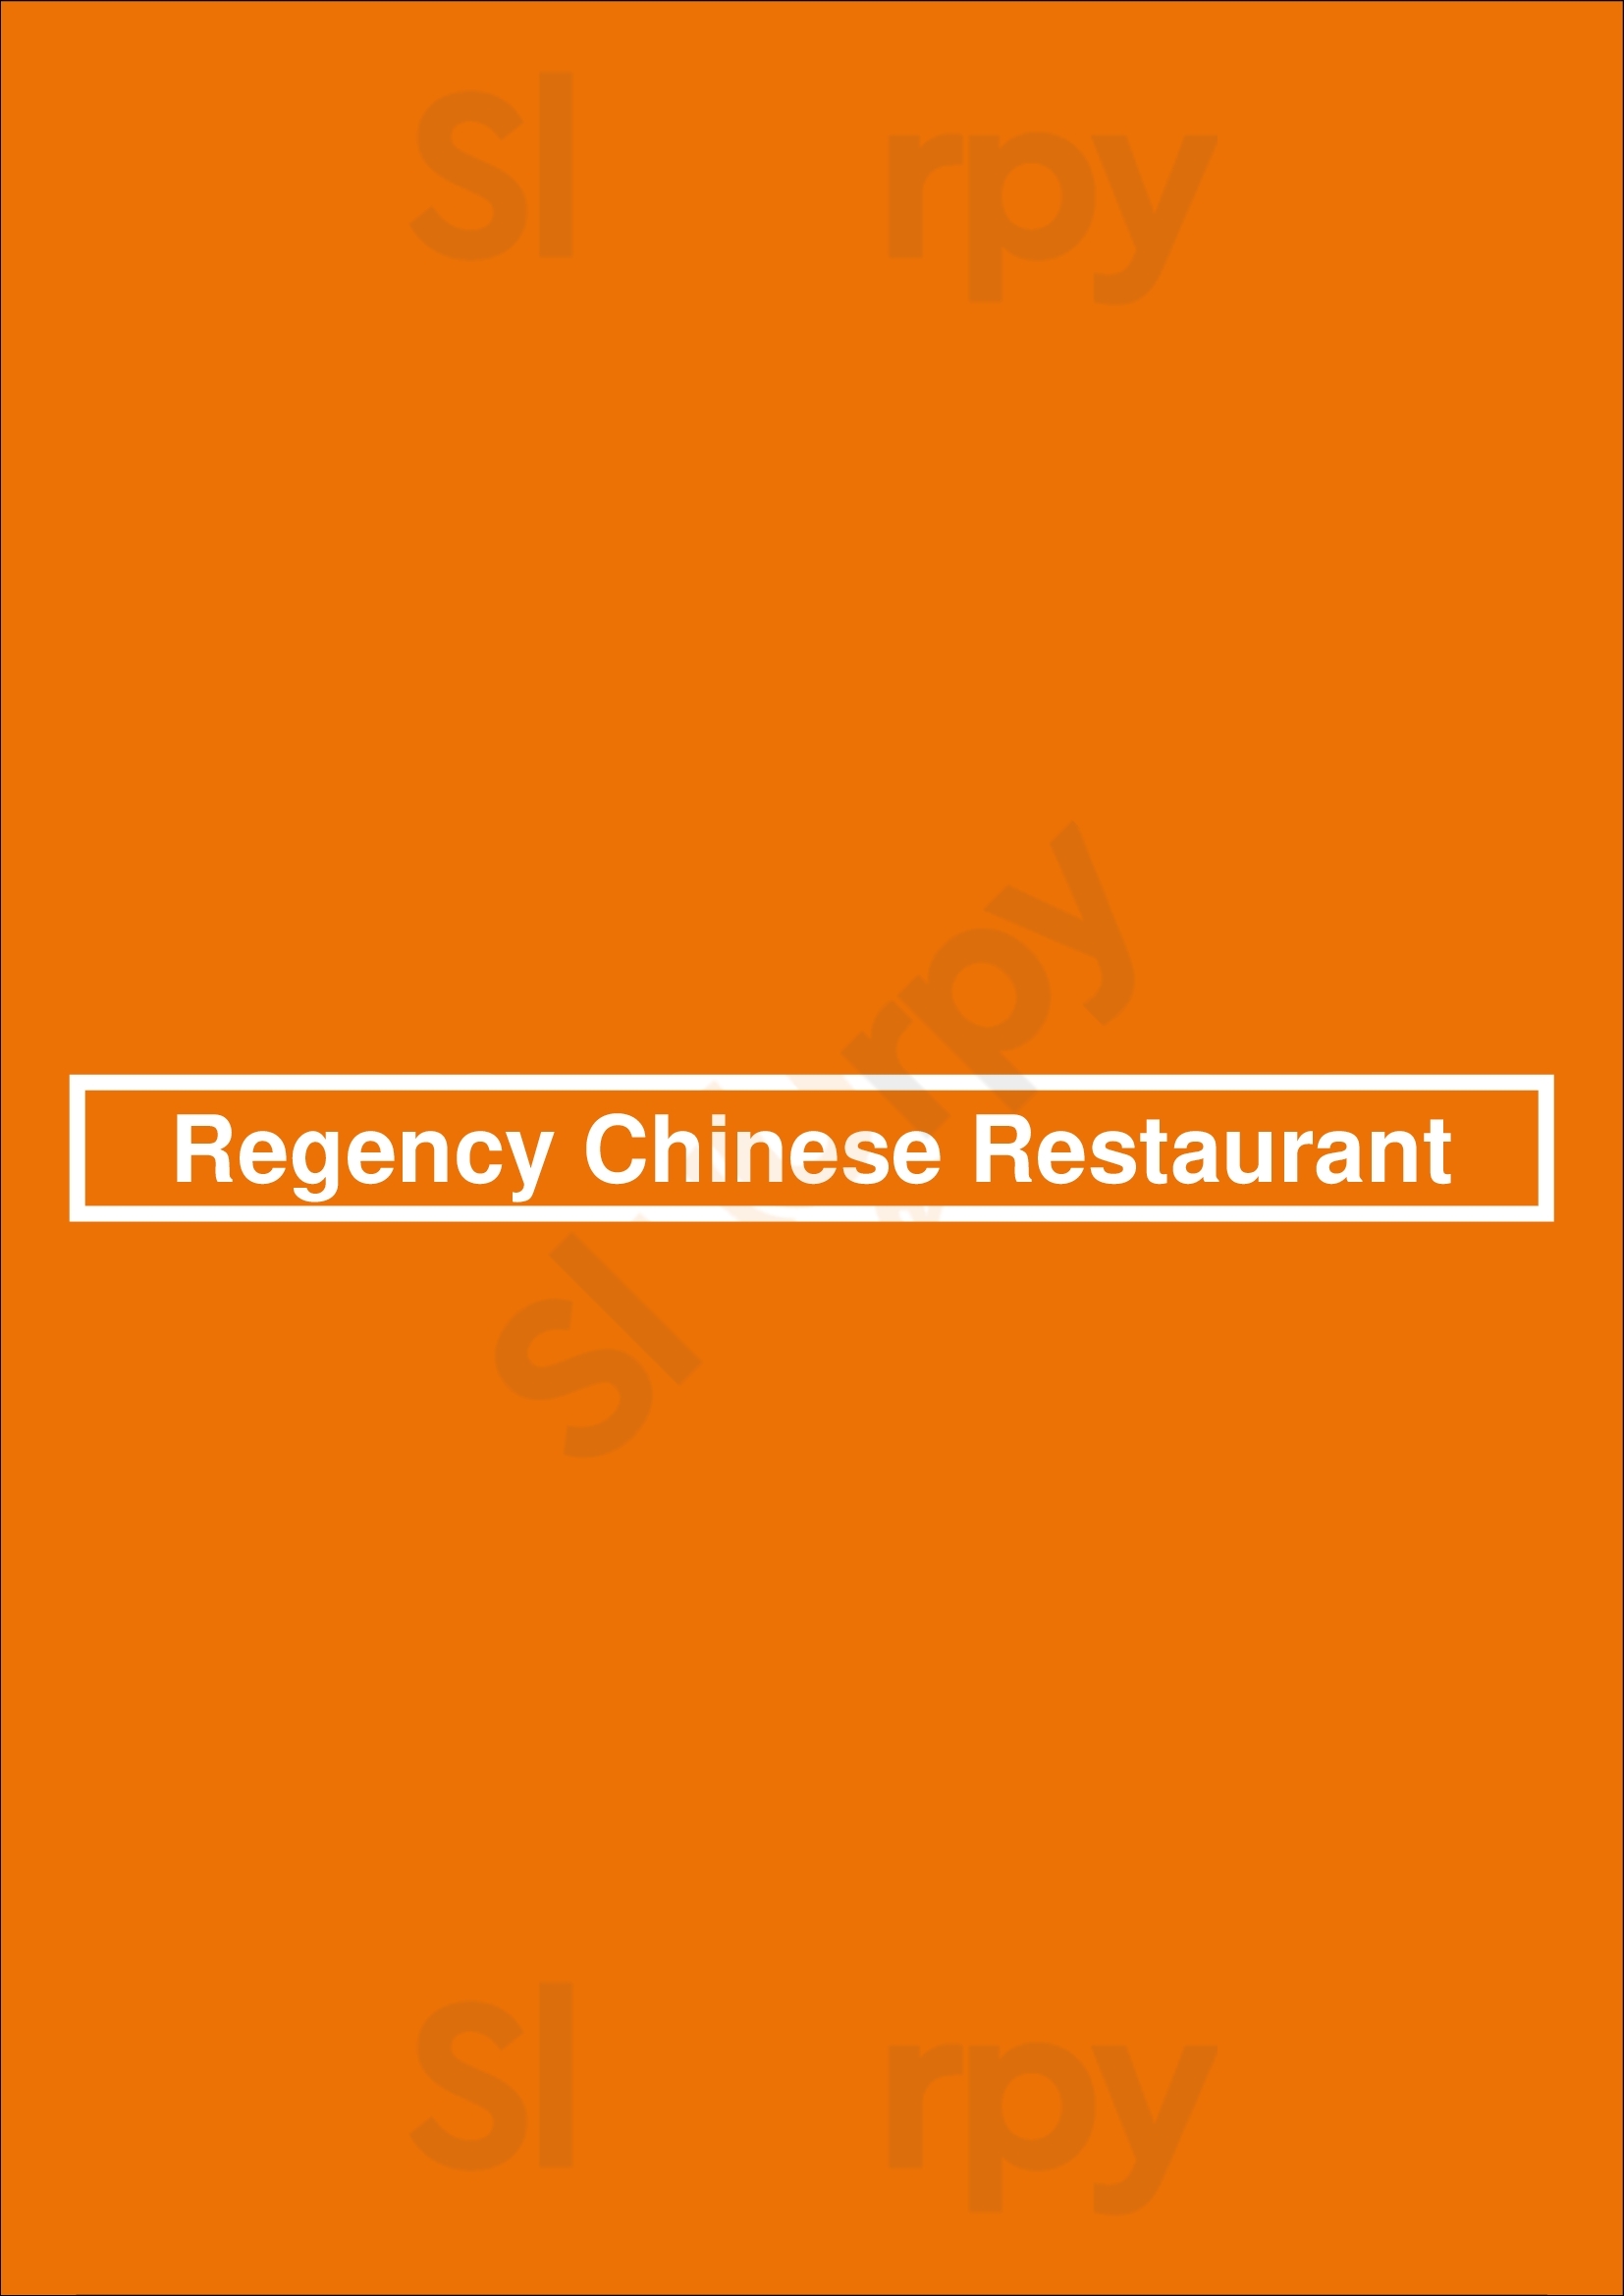 Regency Chinese Restaurant York Menu - 1